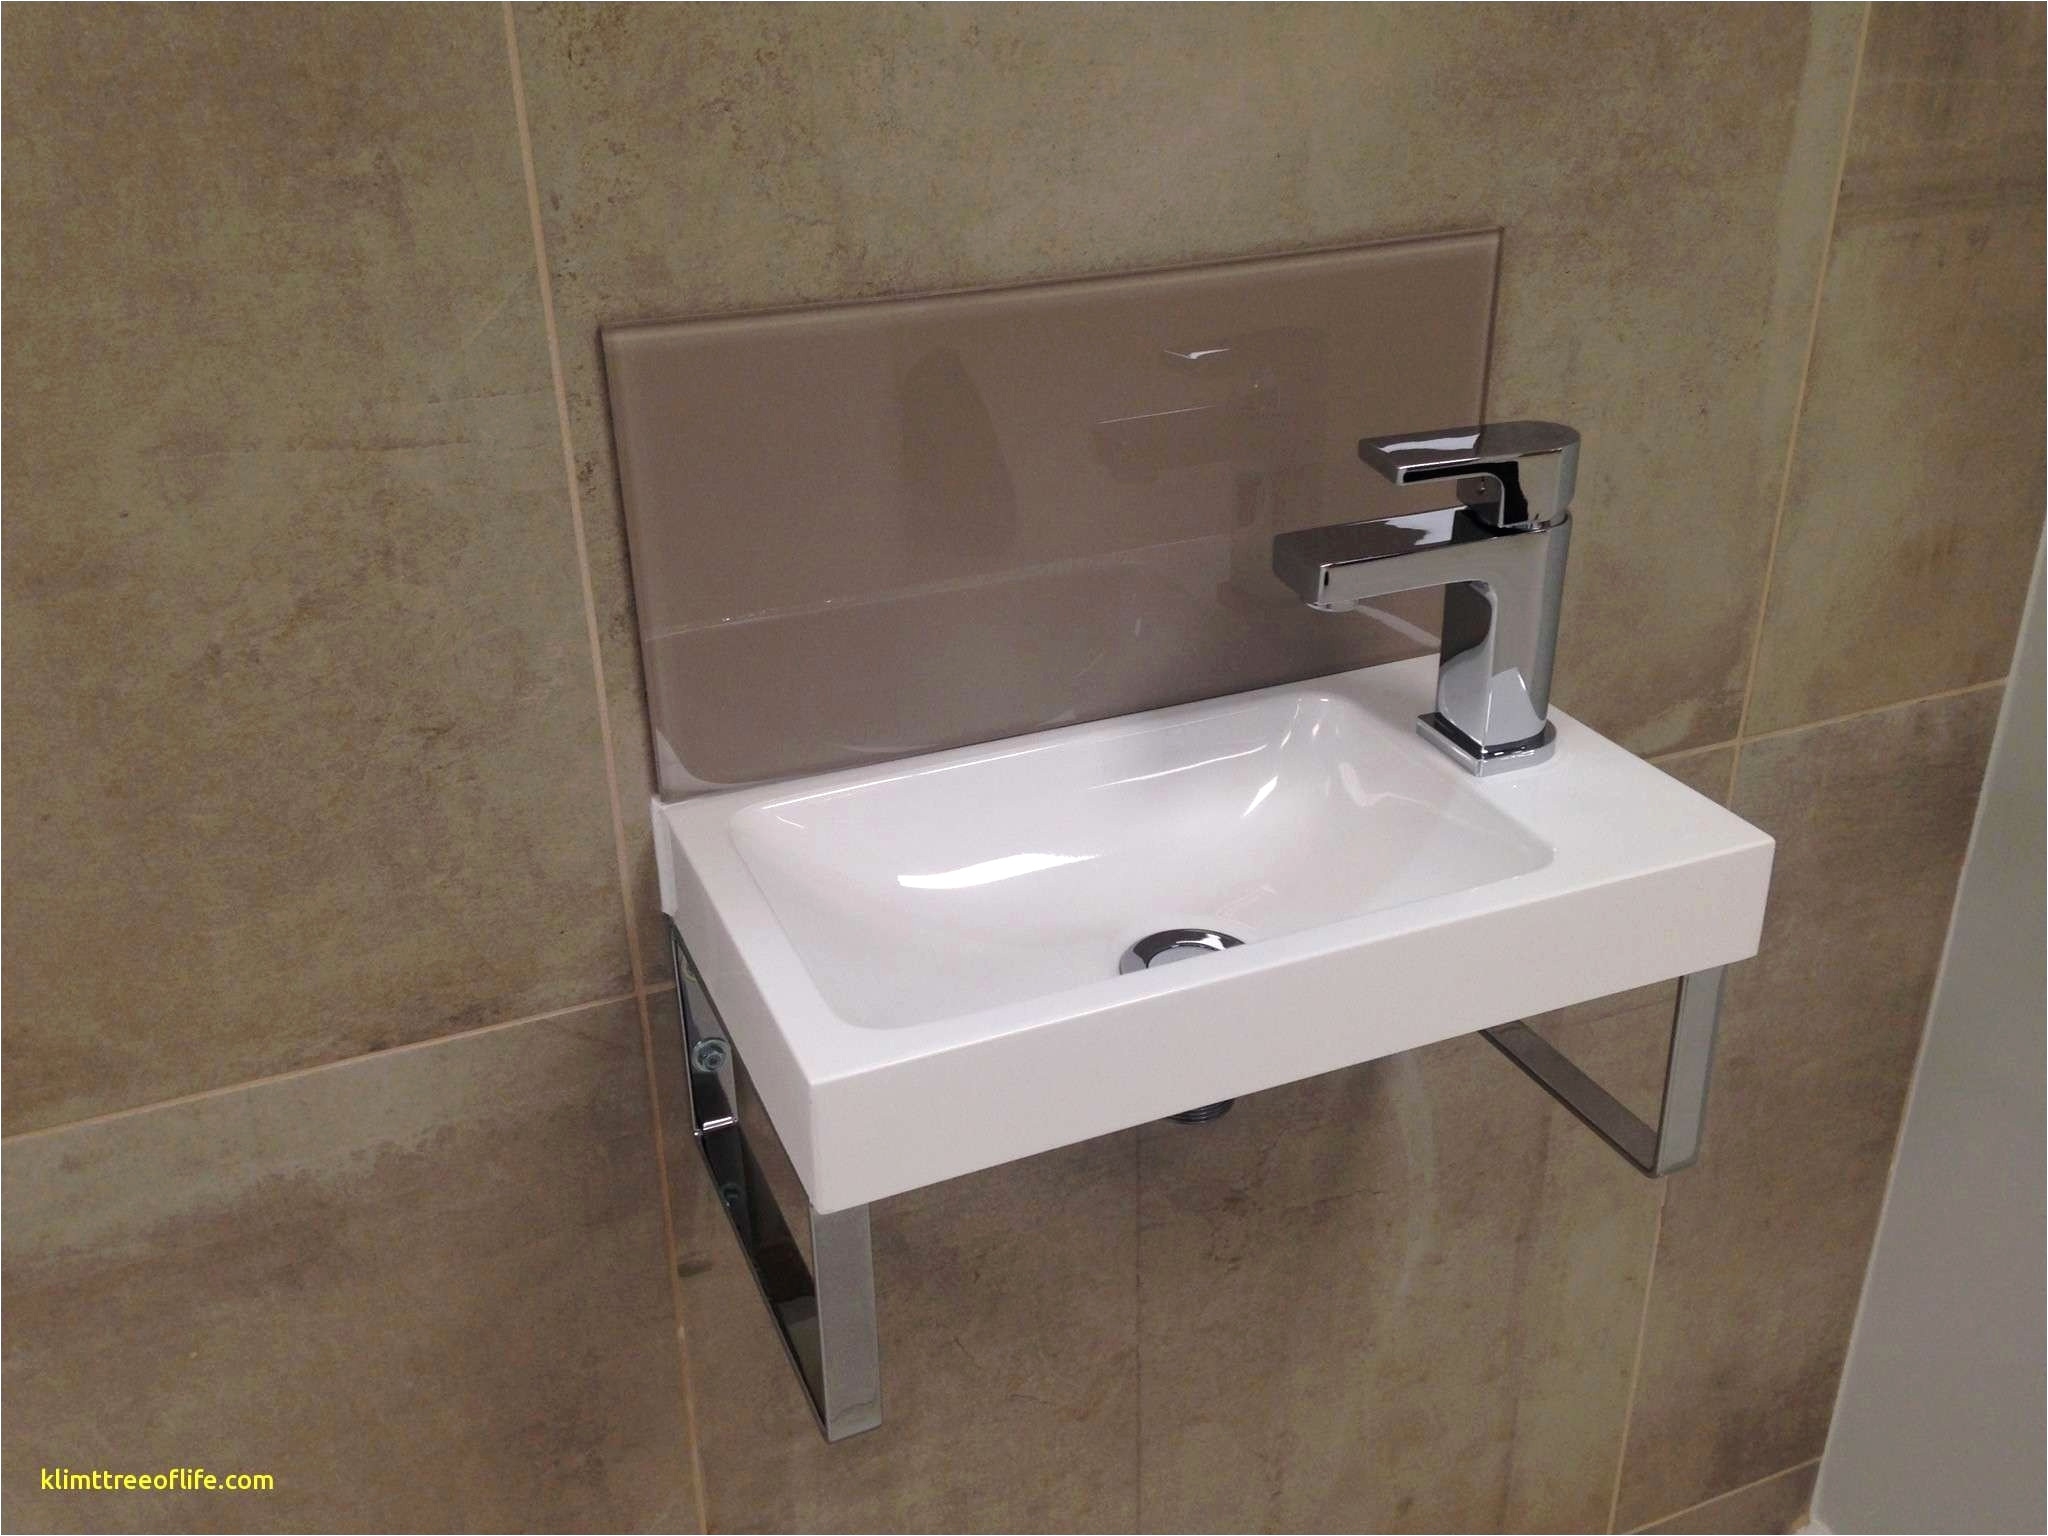 Shower for Bathroom Inspirational Bathroom Shower Design Ideas Decor Ideas H8d Shower for Bathroom Luxury